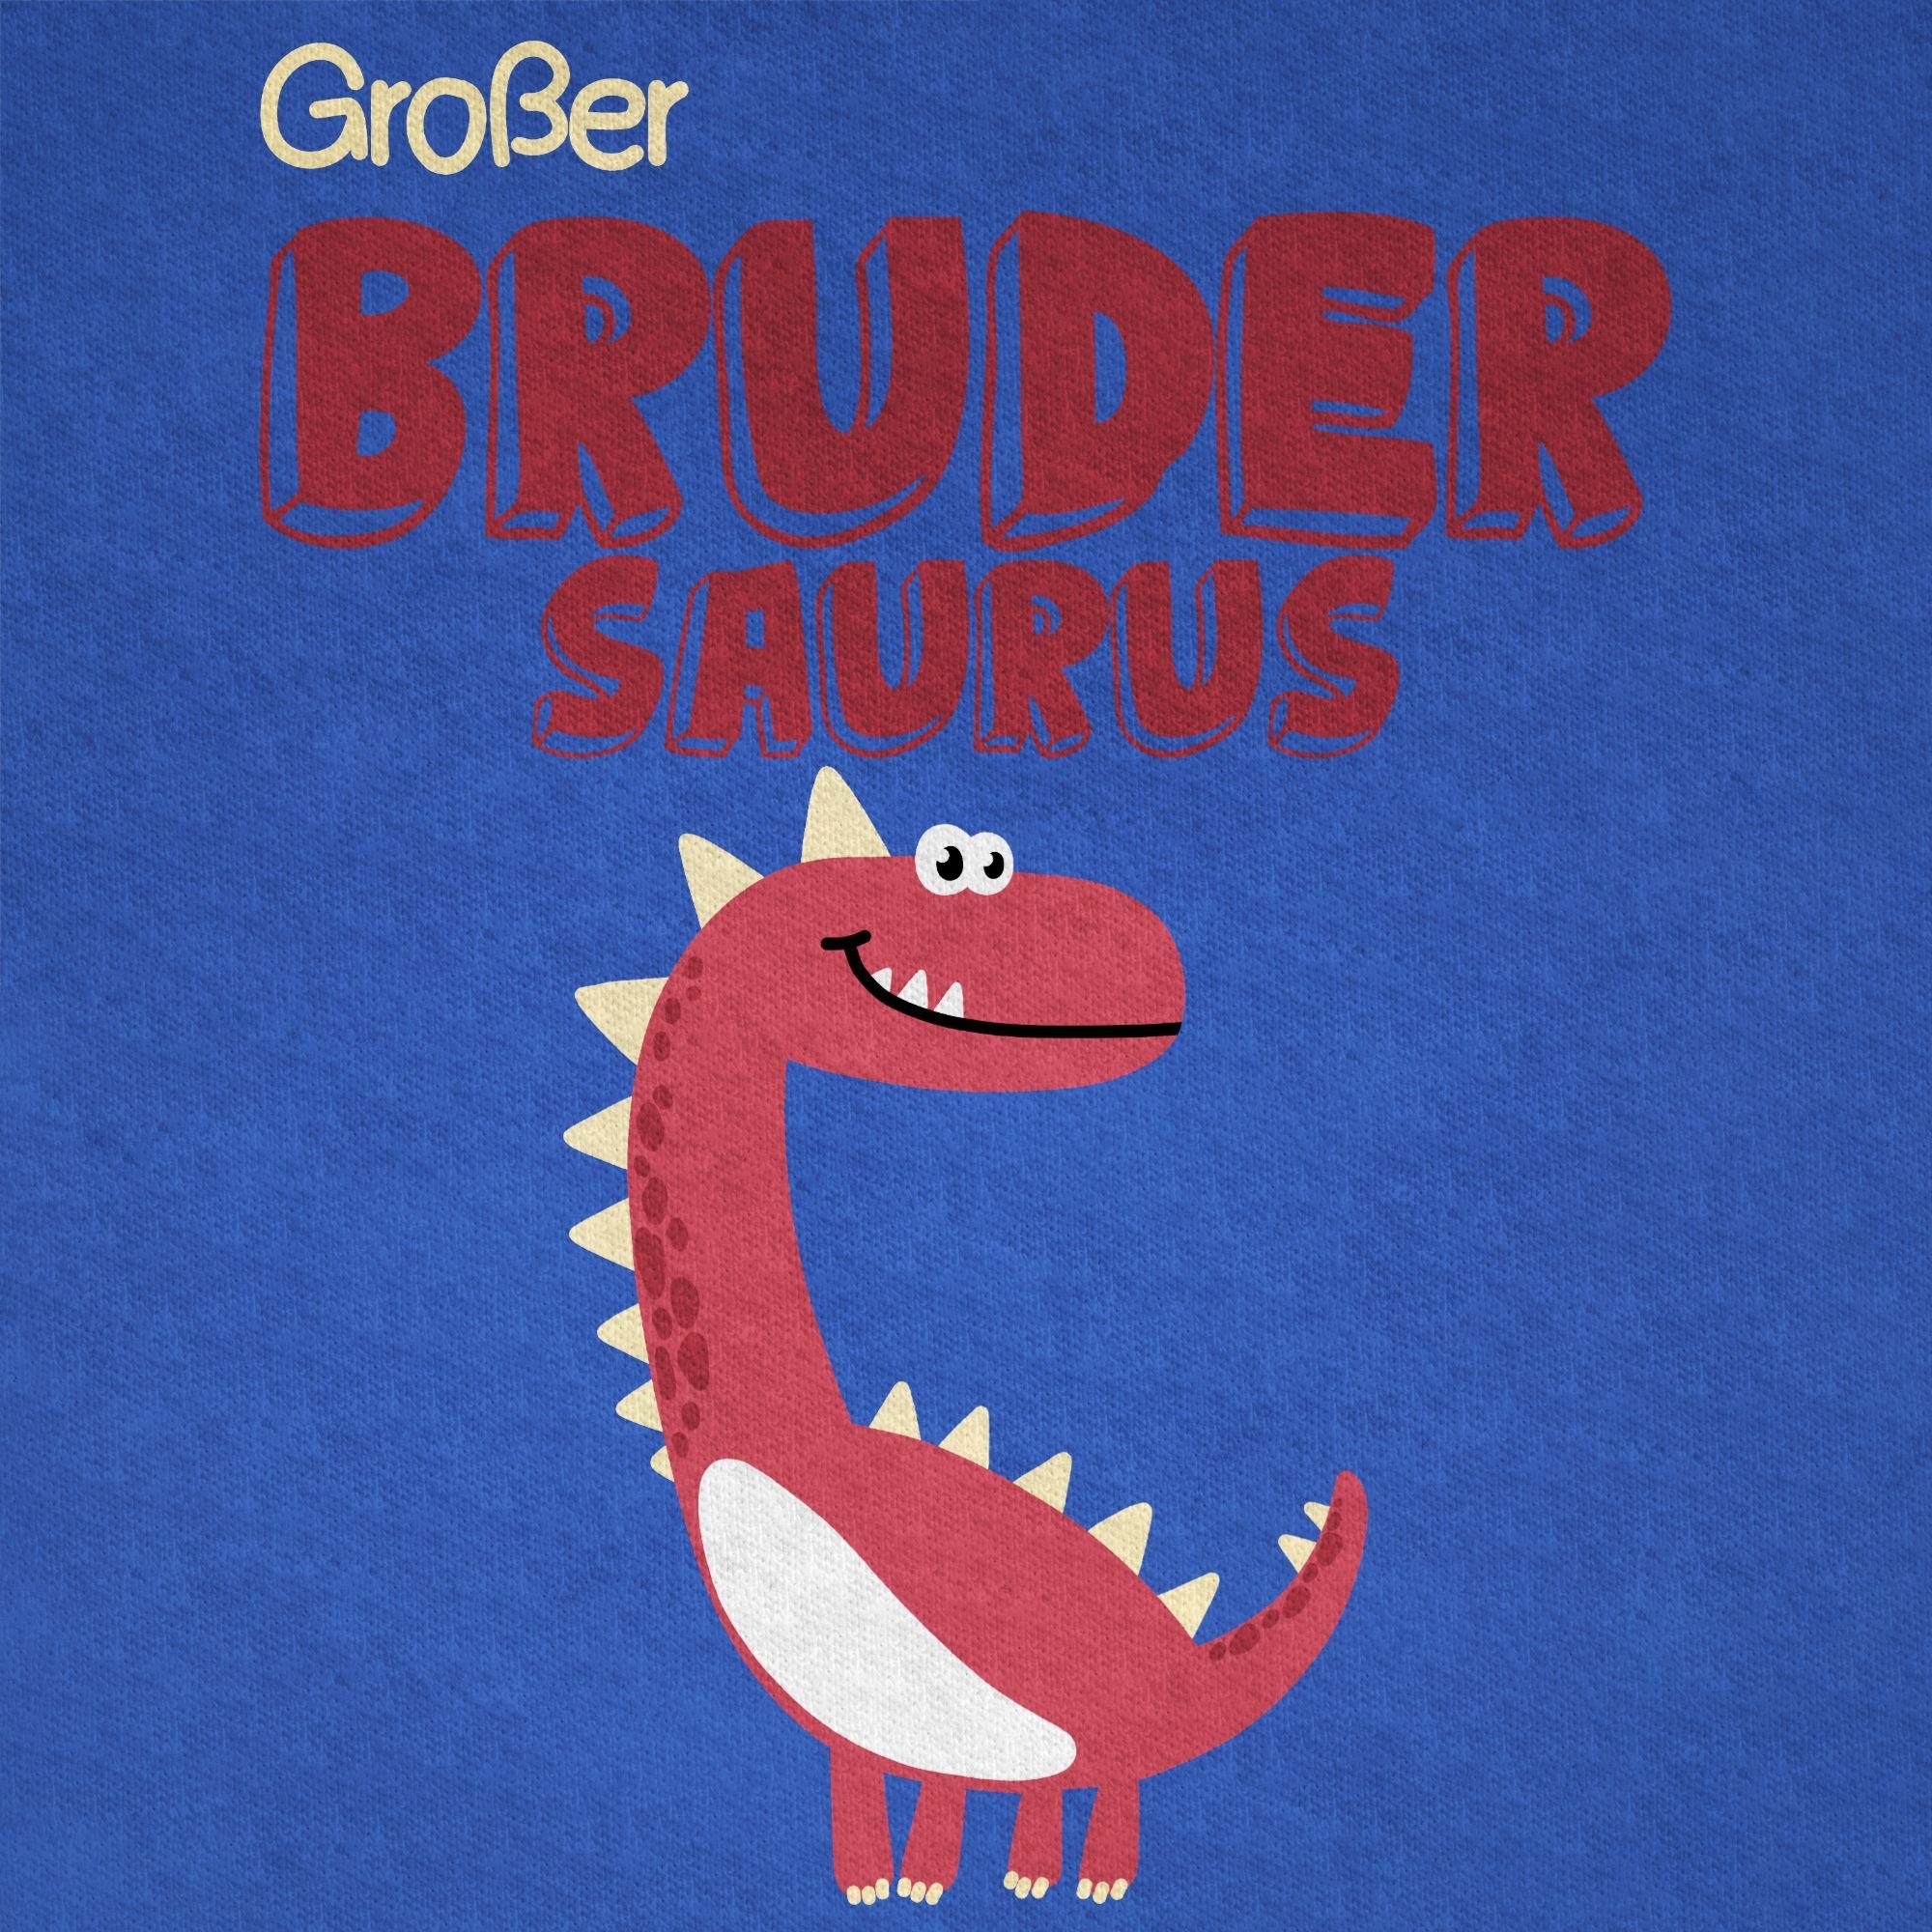 03 Bruder Shirtracer T-Shirt Großer Royalblau Großer Brudersaurus